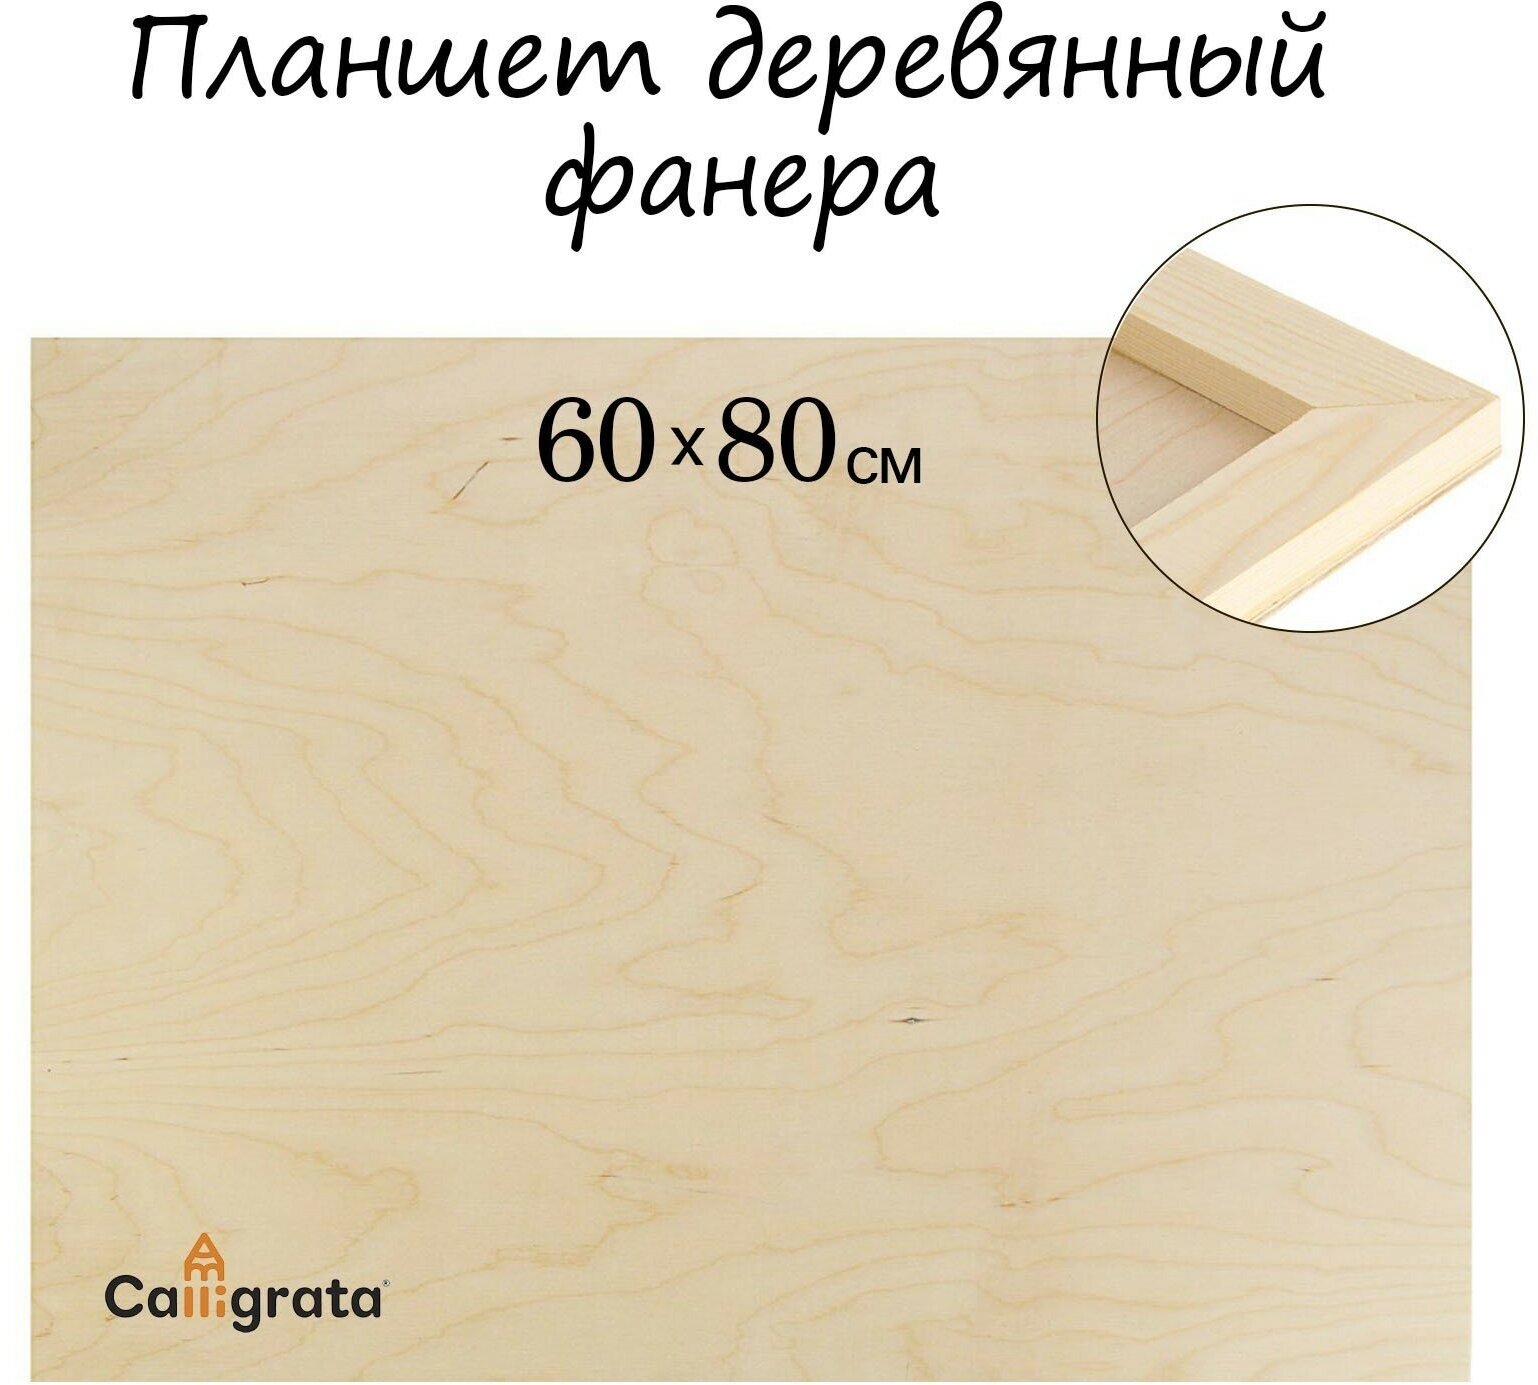 Планшет деревянный 60 х 80 х 2 см, фанера